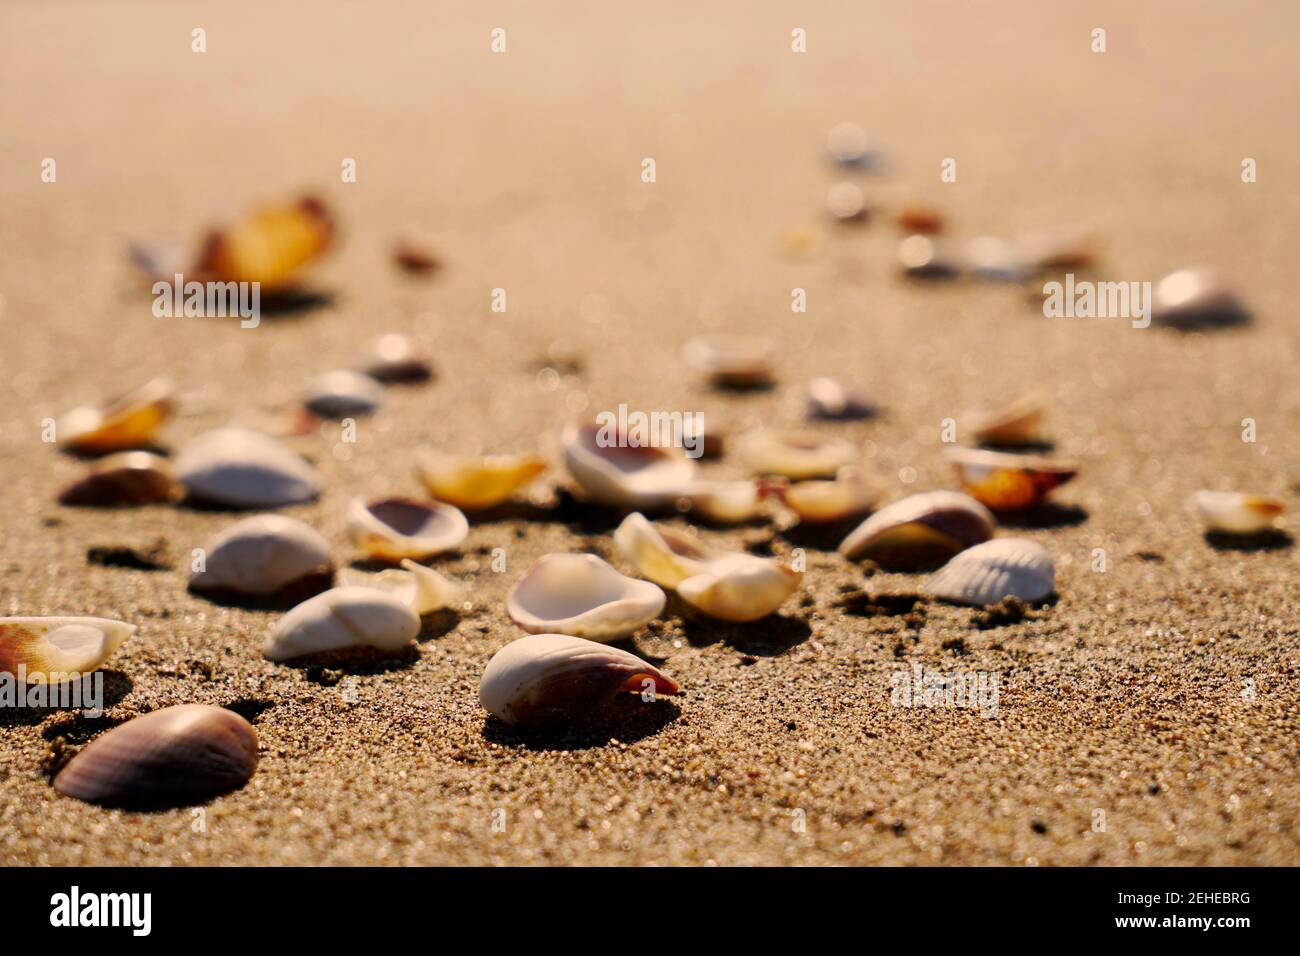 clam shells on the beach sand Stock Photo